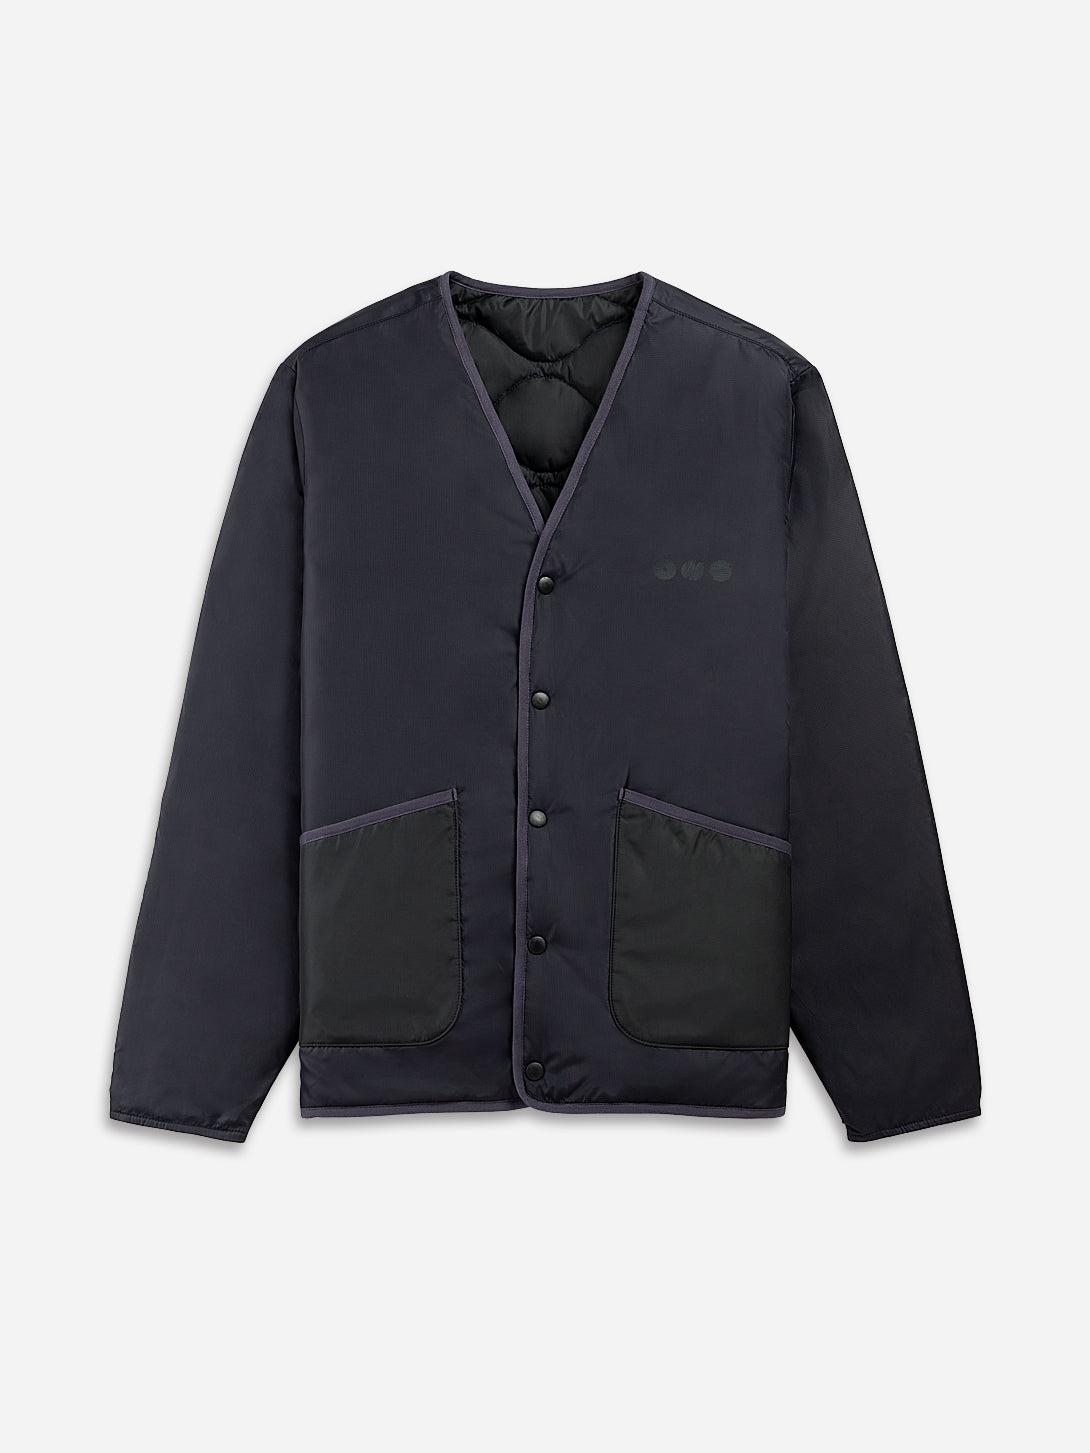 Black Crescent Reversible Quilted Jacket